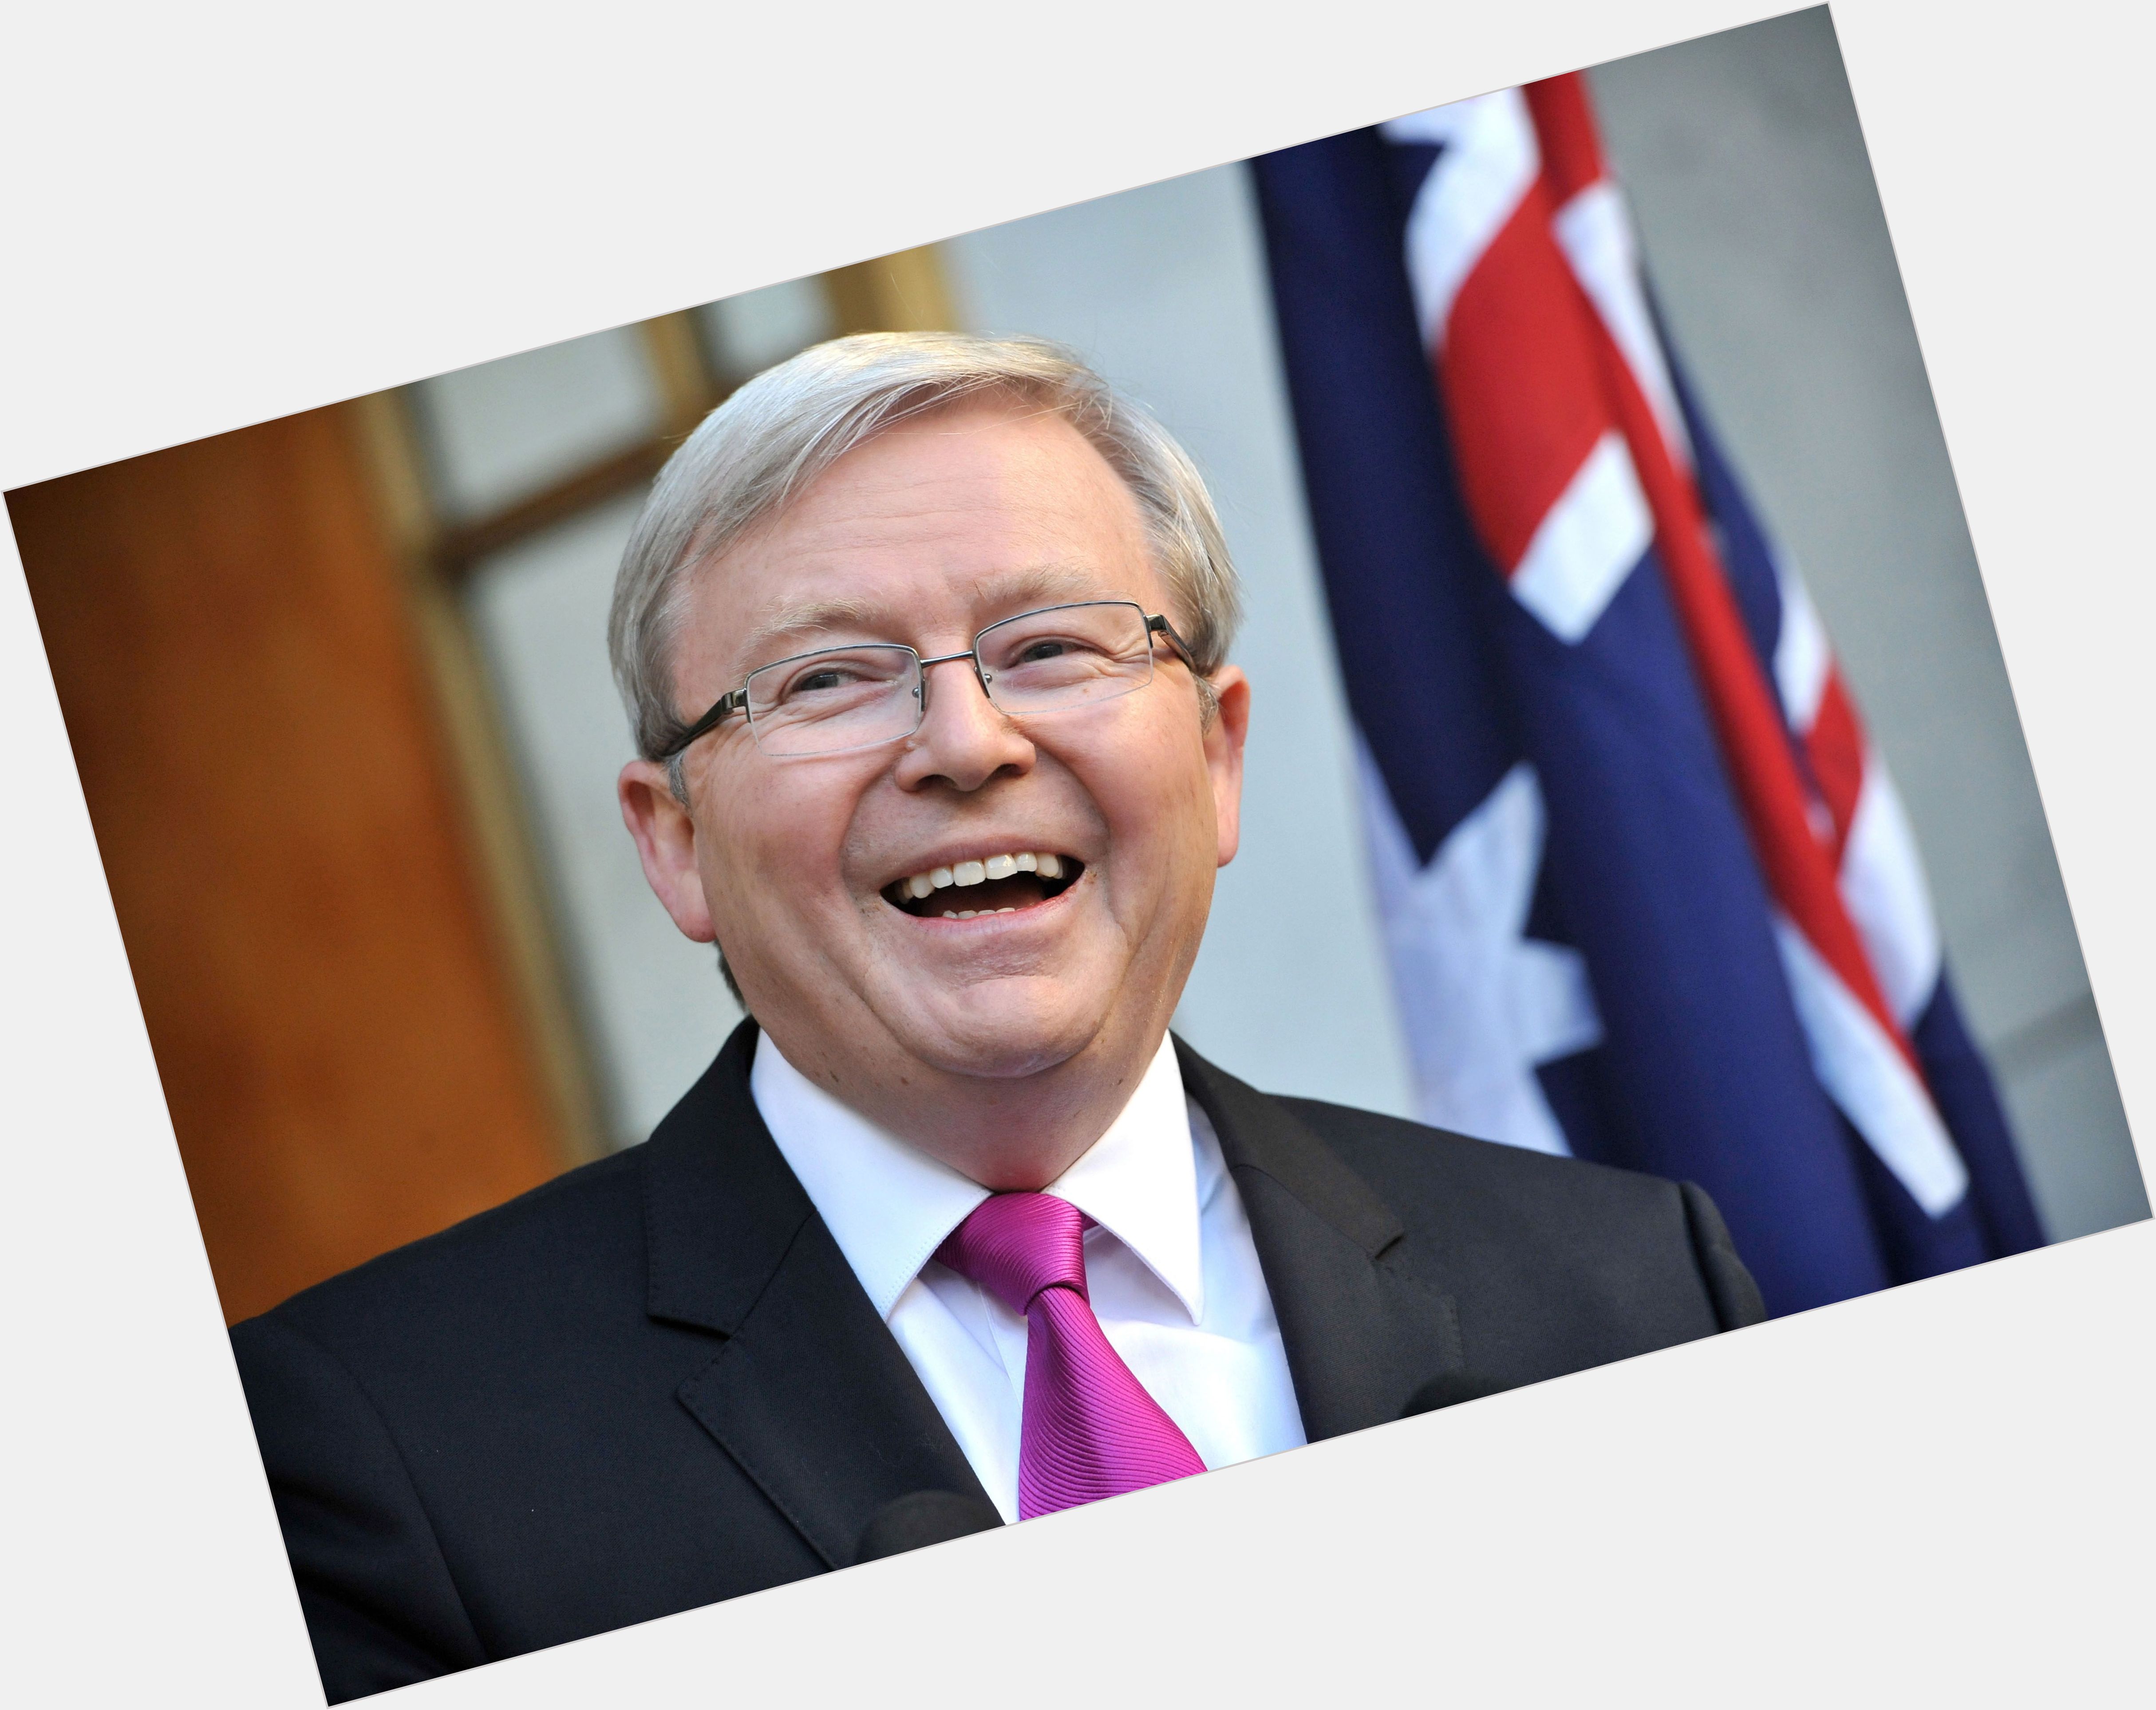 <a href="/hot-men/kevin-rudd/where-dating-news-photos">Kevin Rudd</a>  